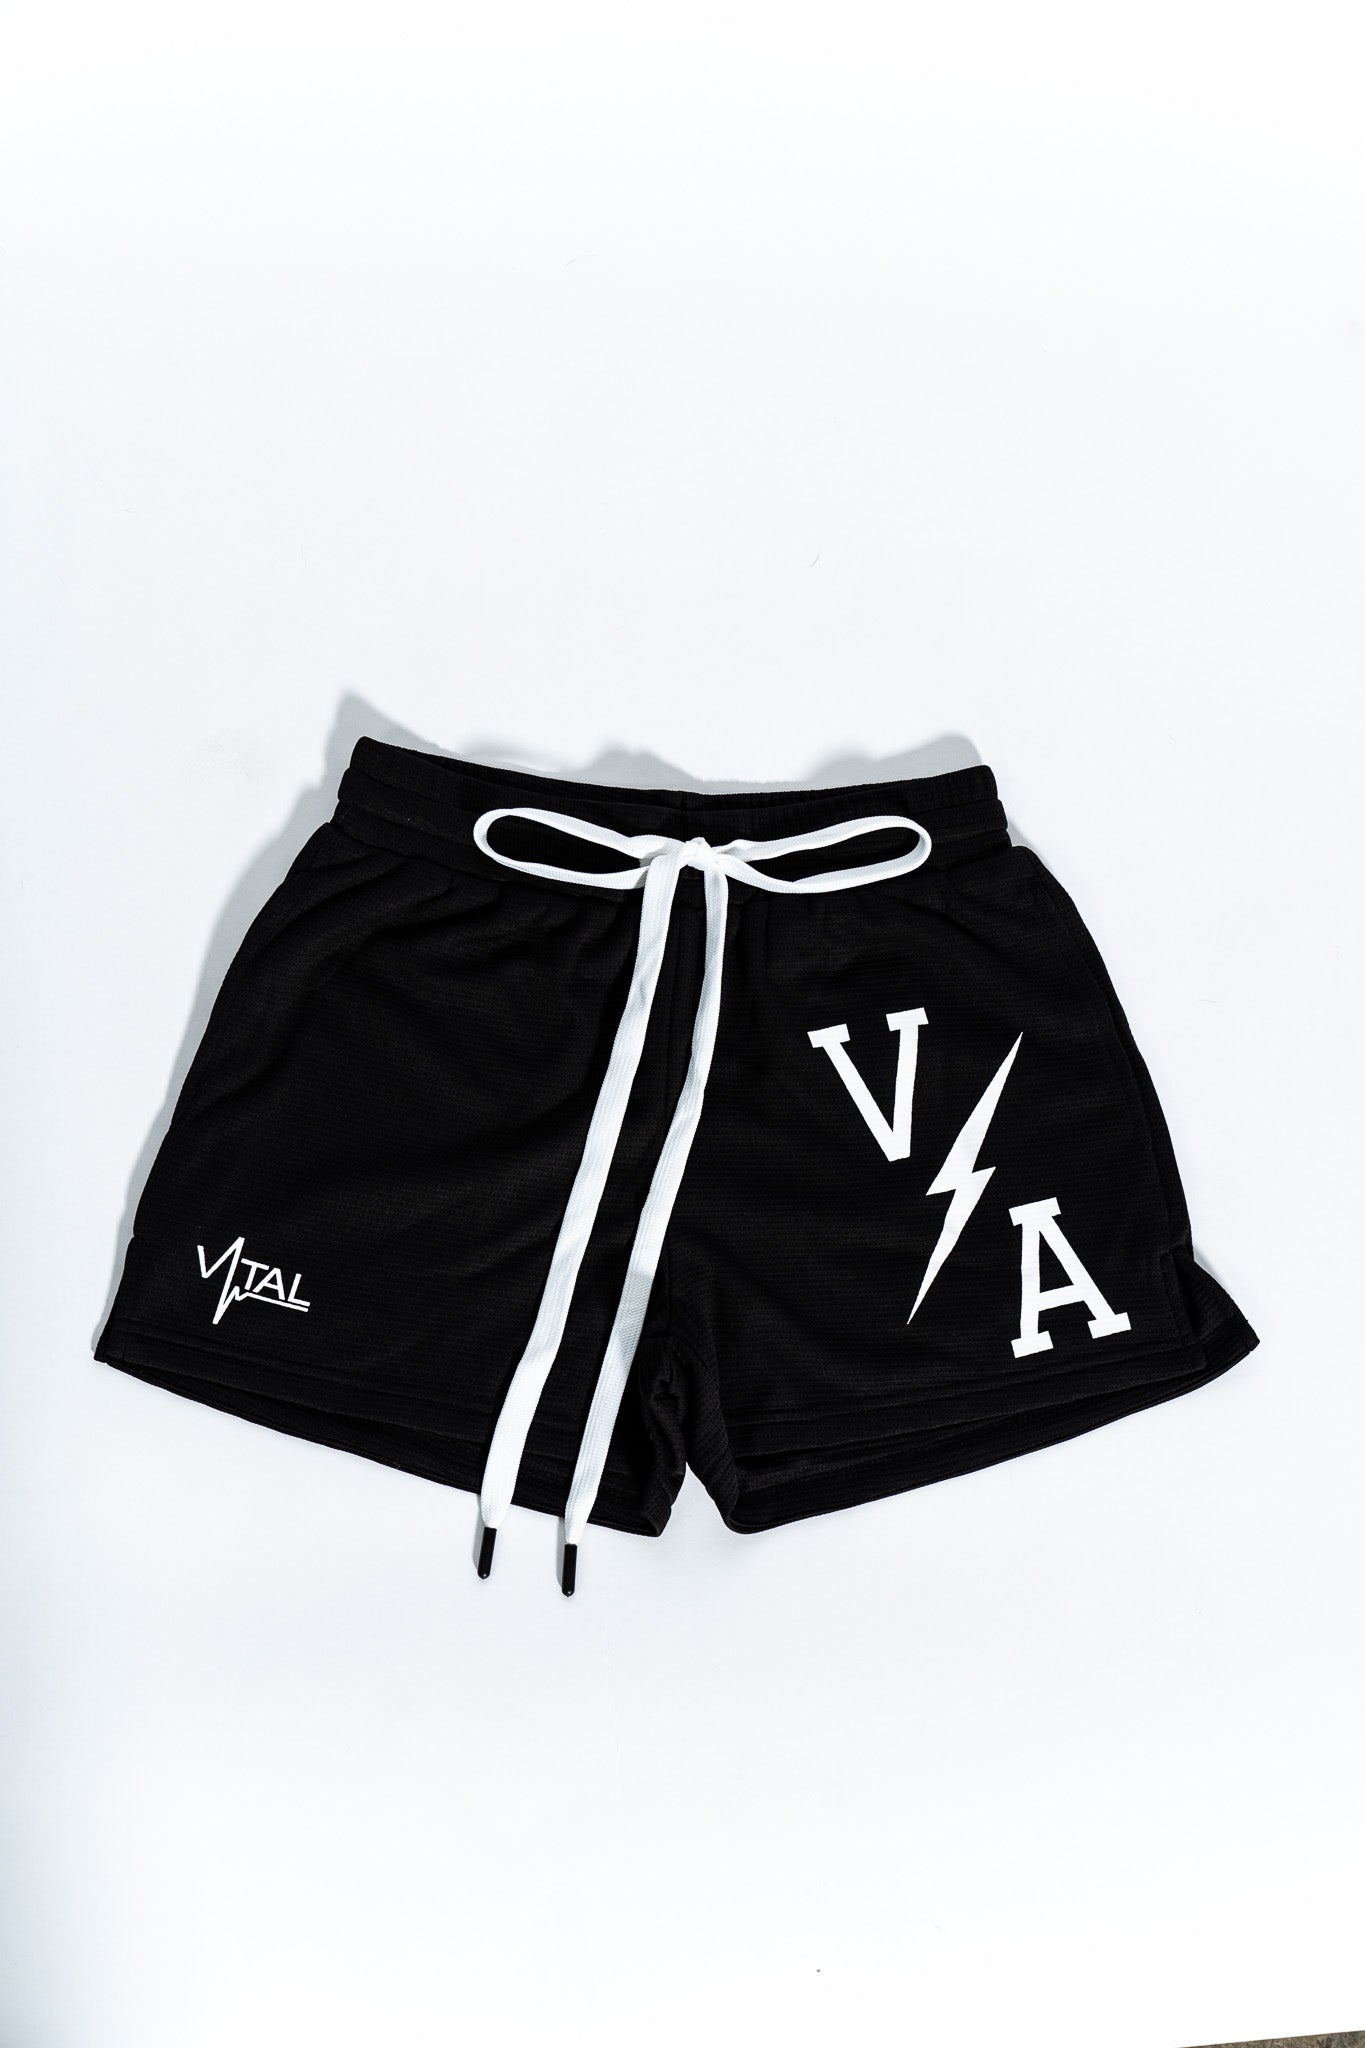 Vital 5 Inch Shorts